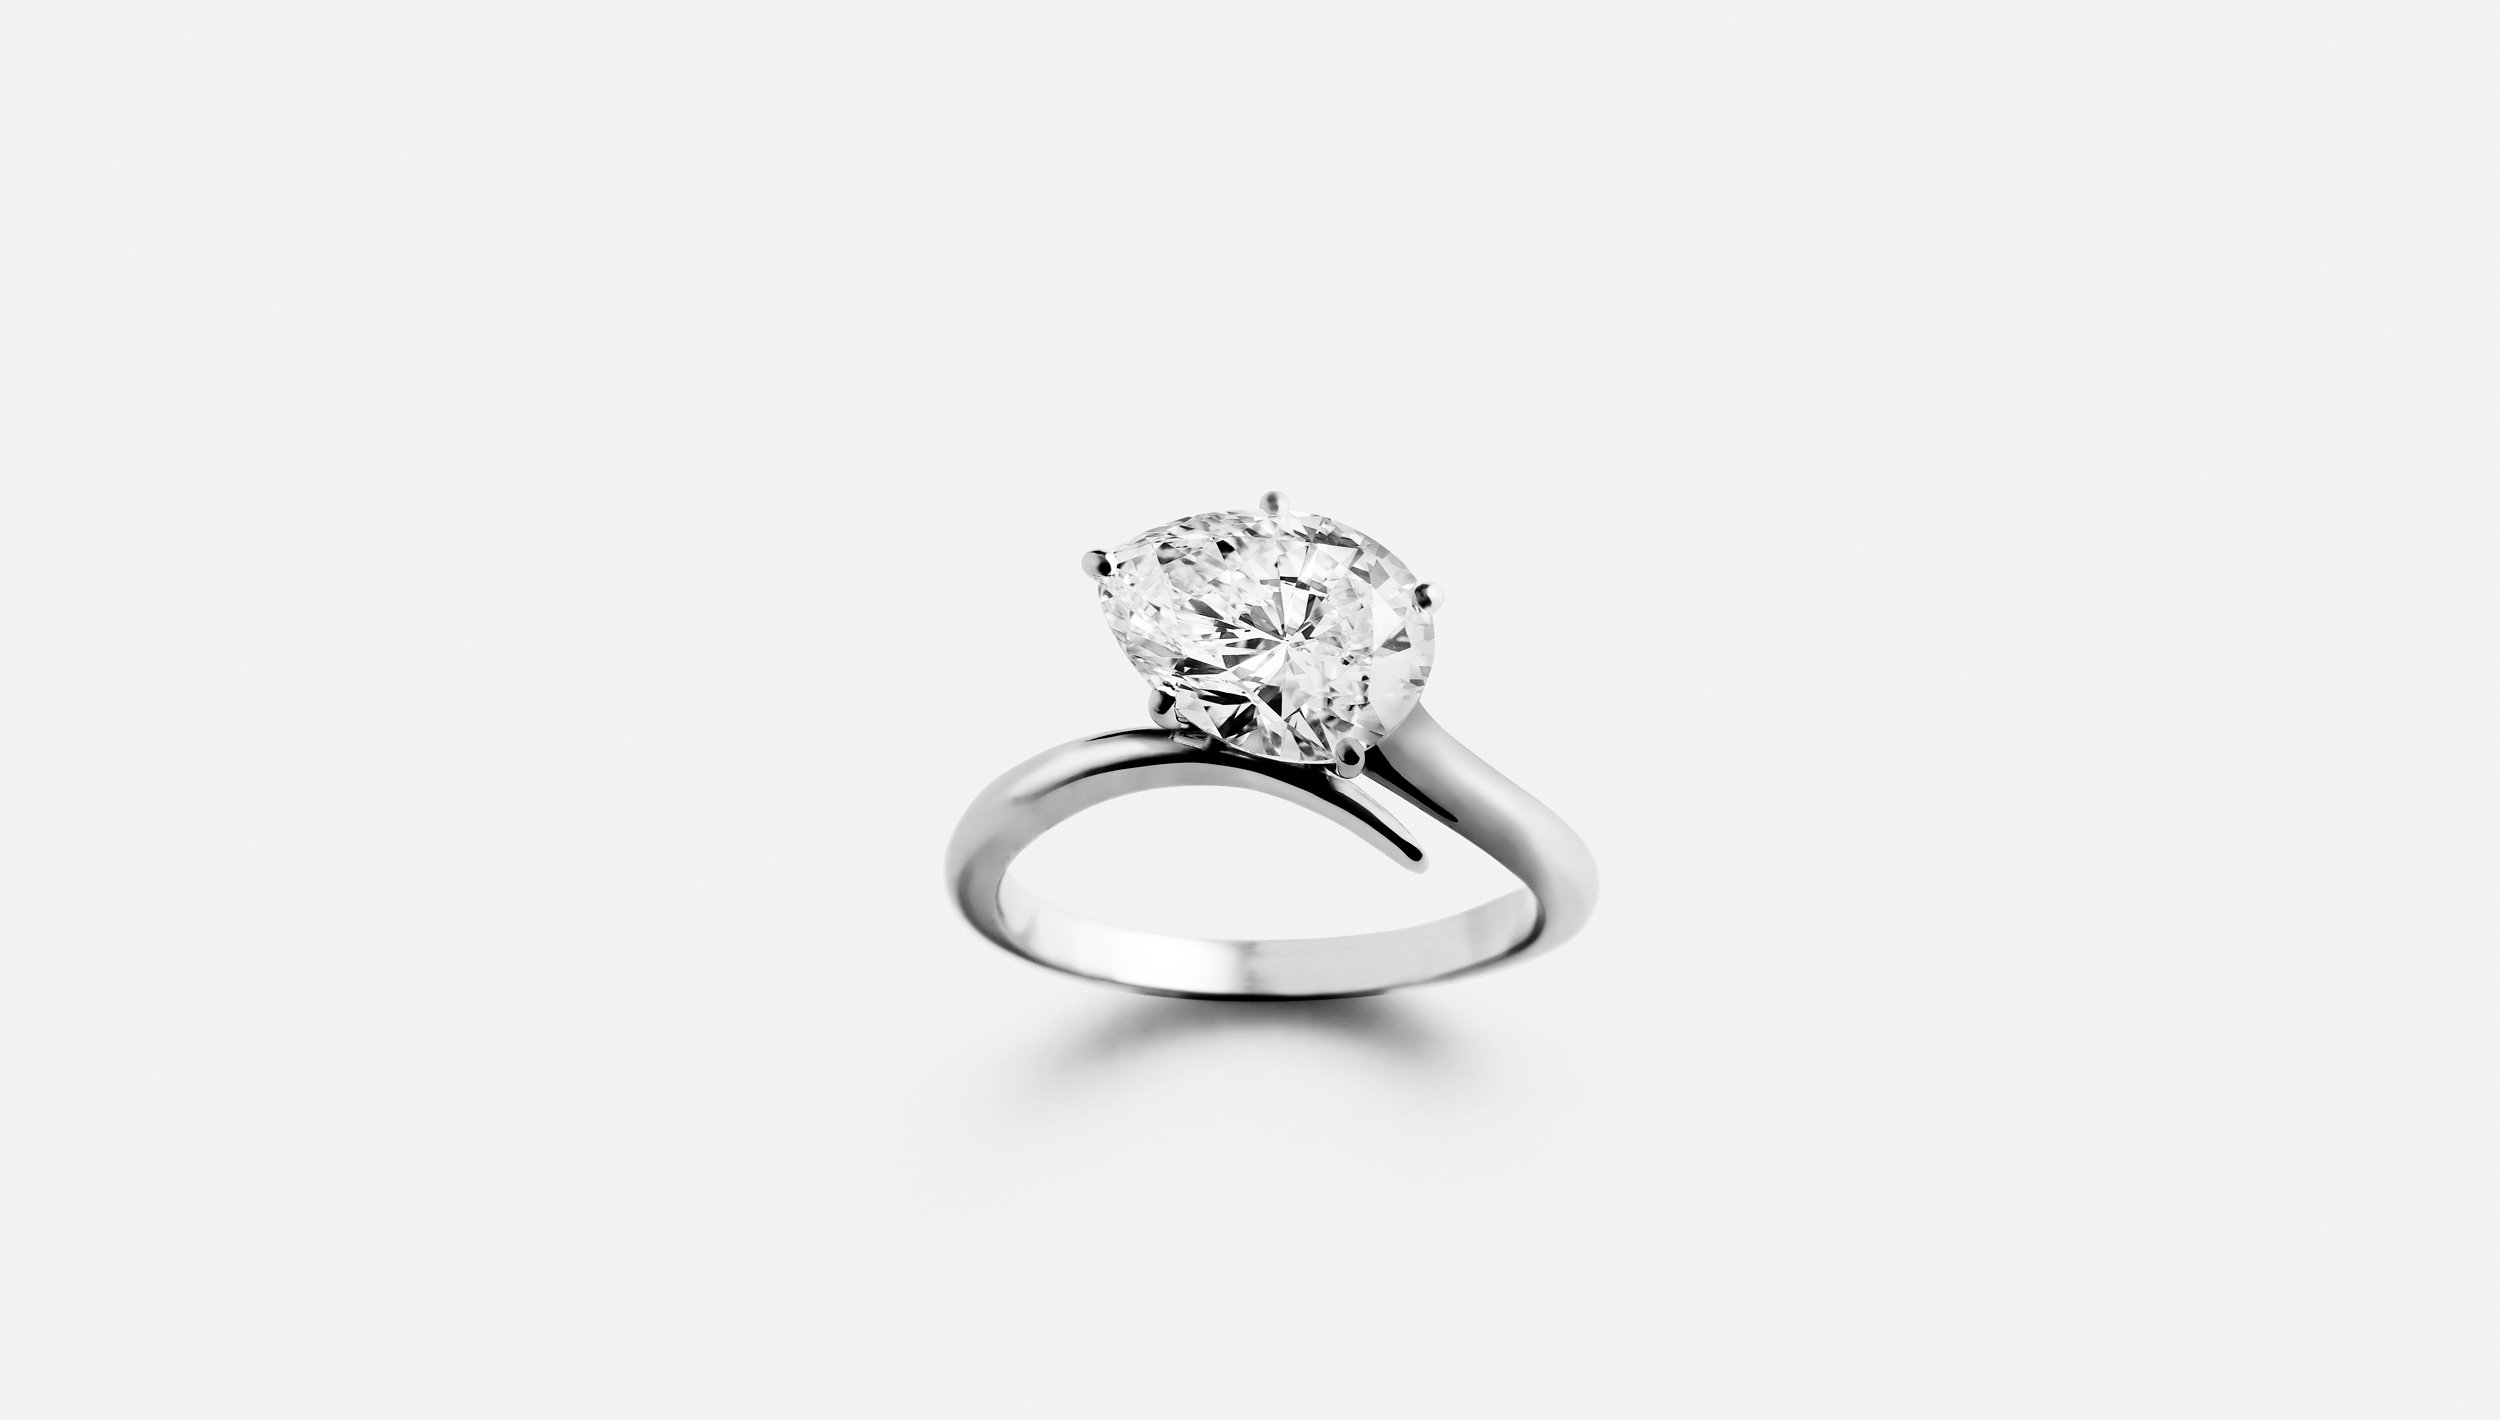 white-gold-pear-shaped-diamond-ring-0n-white-background.jpg